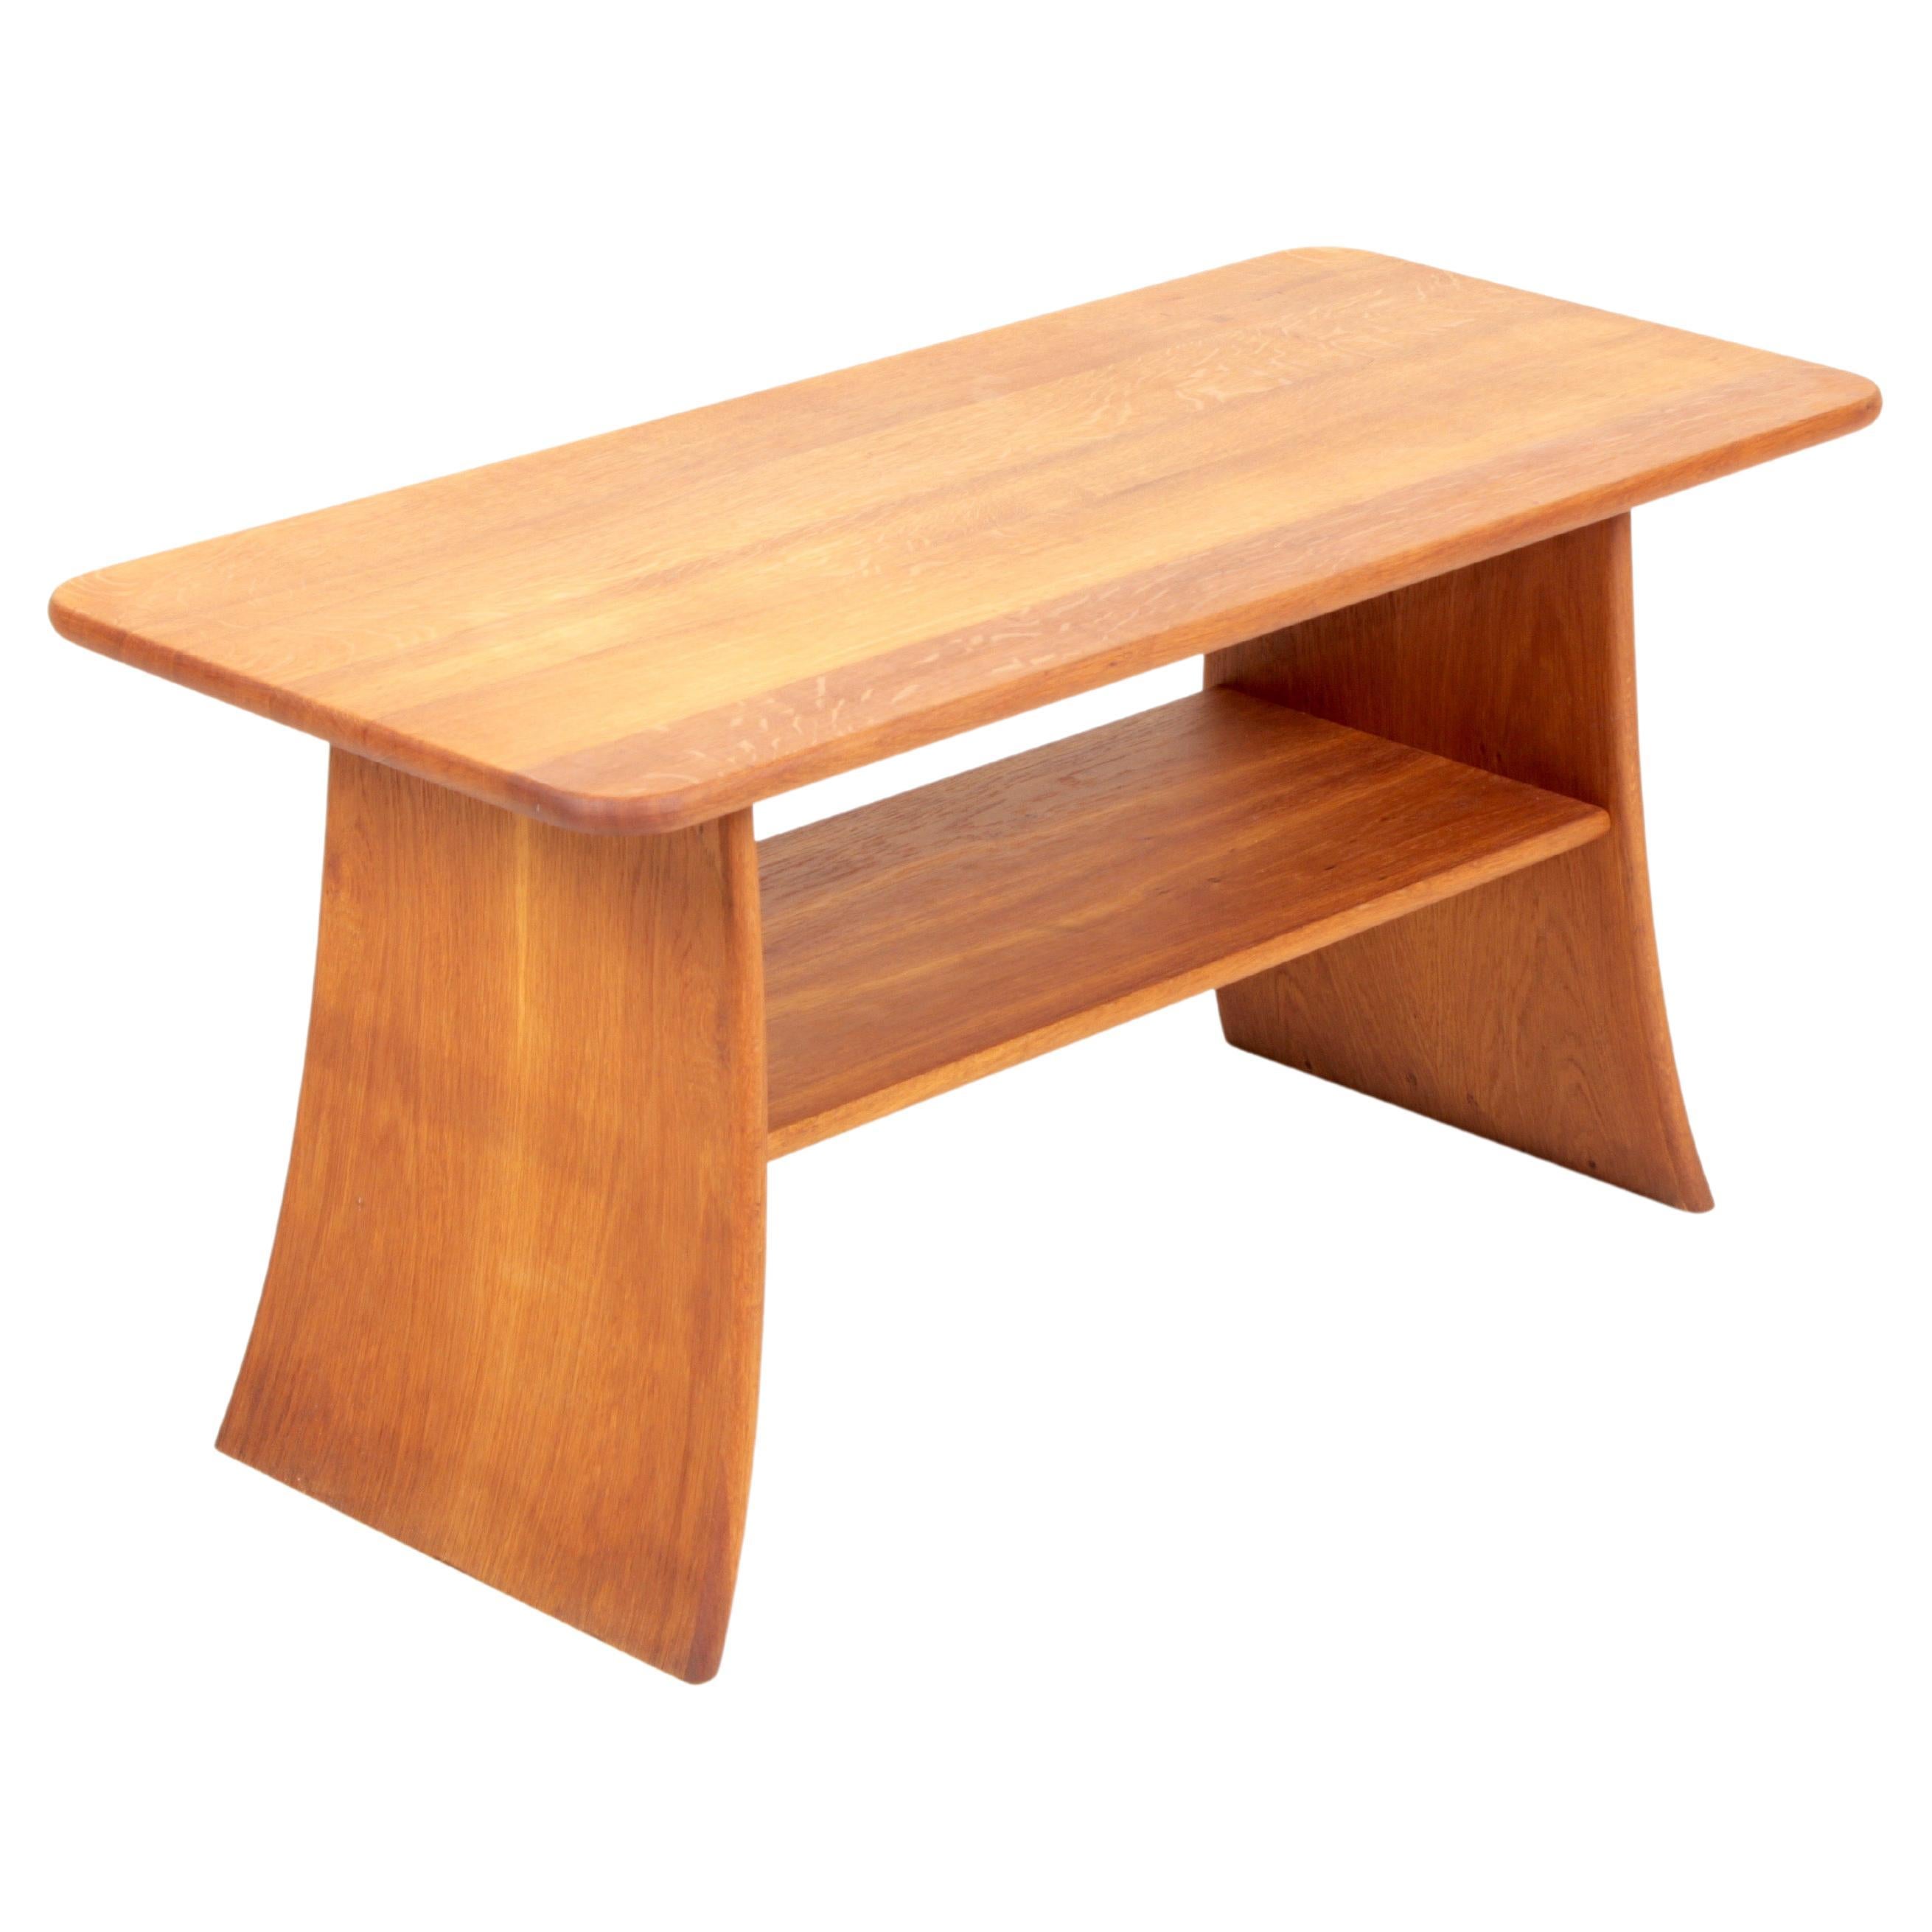 Midcentury Low Table in Solid Oak, Danish Cabinetmaker, 1950s For Sale